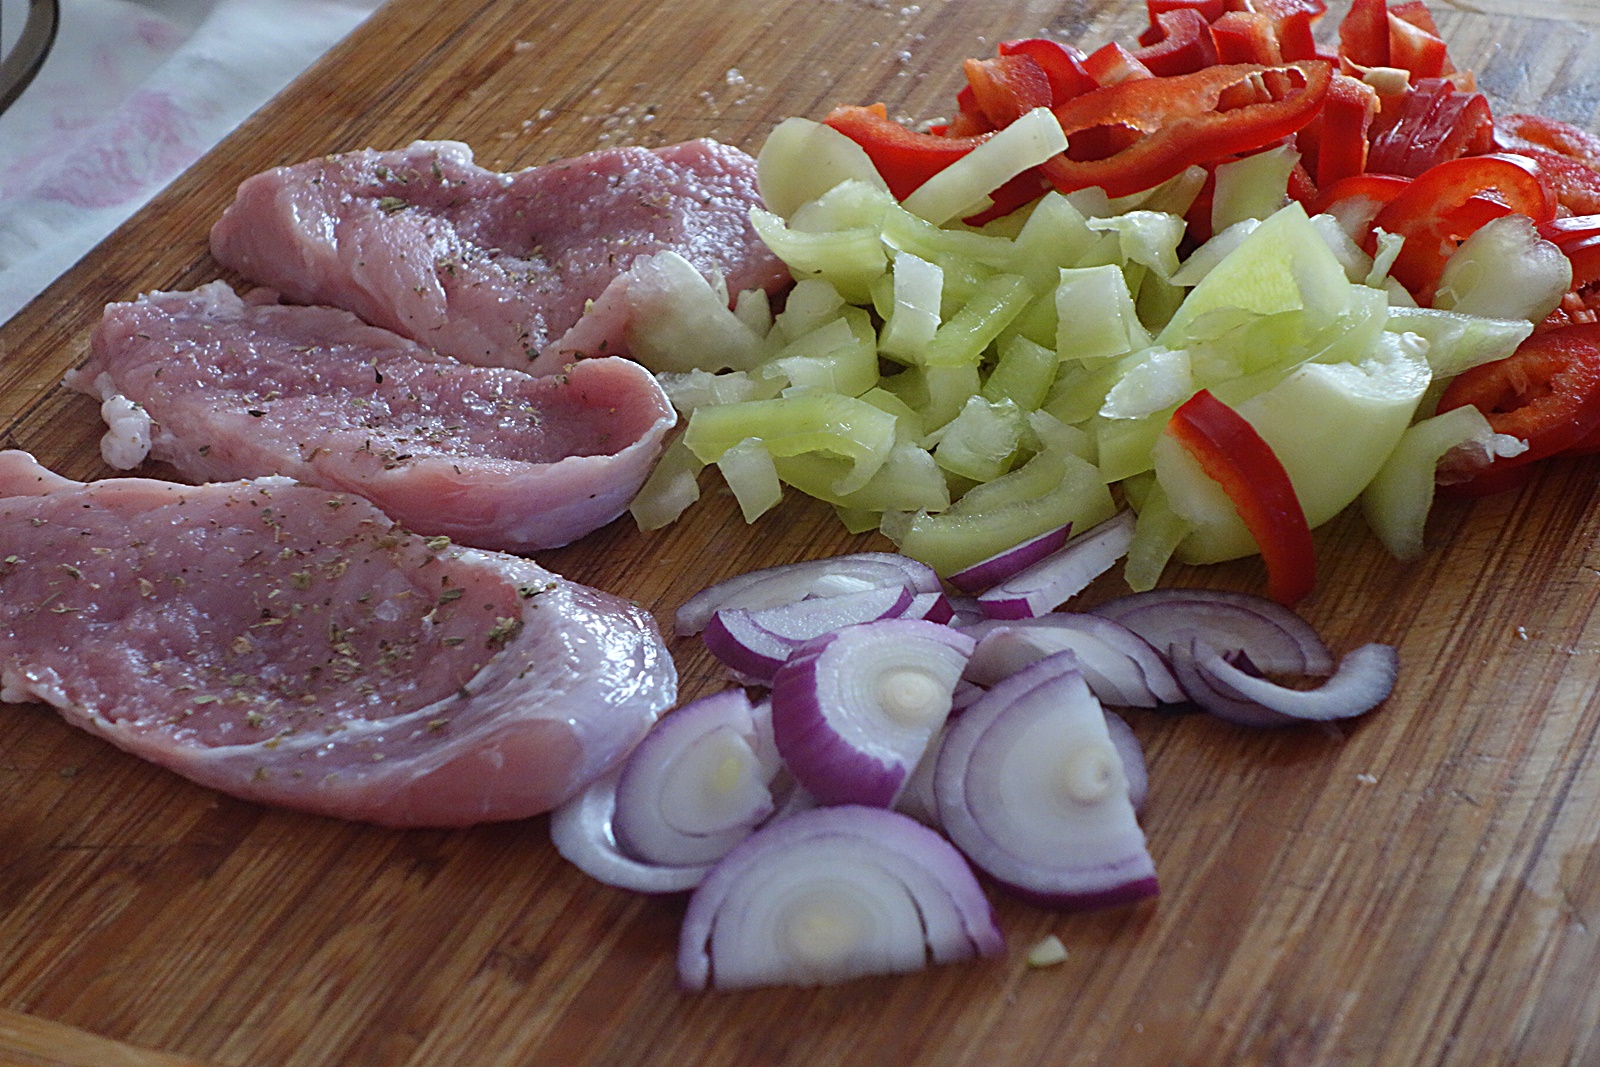 Turtite din cartofi cu legume sotate si muschiulet de porc